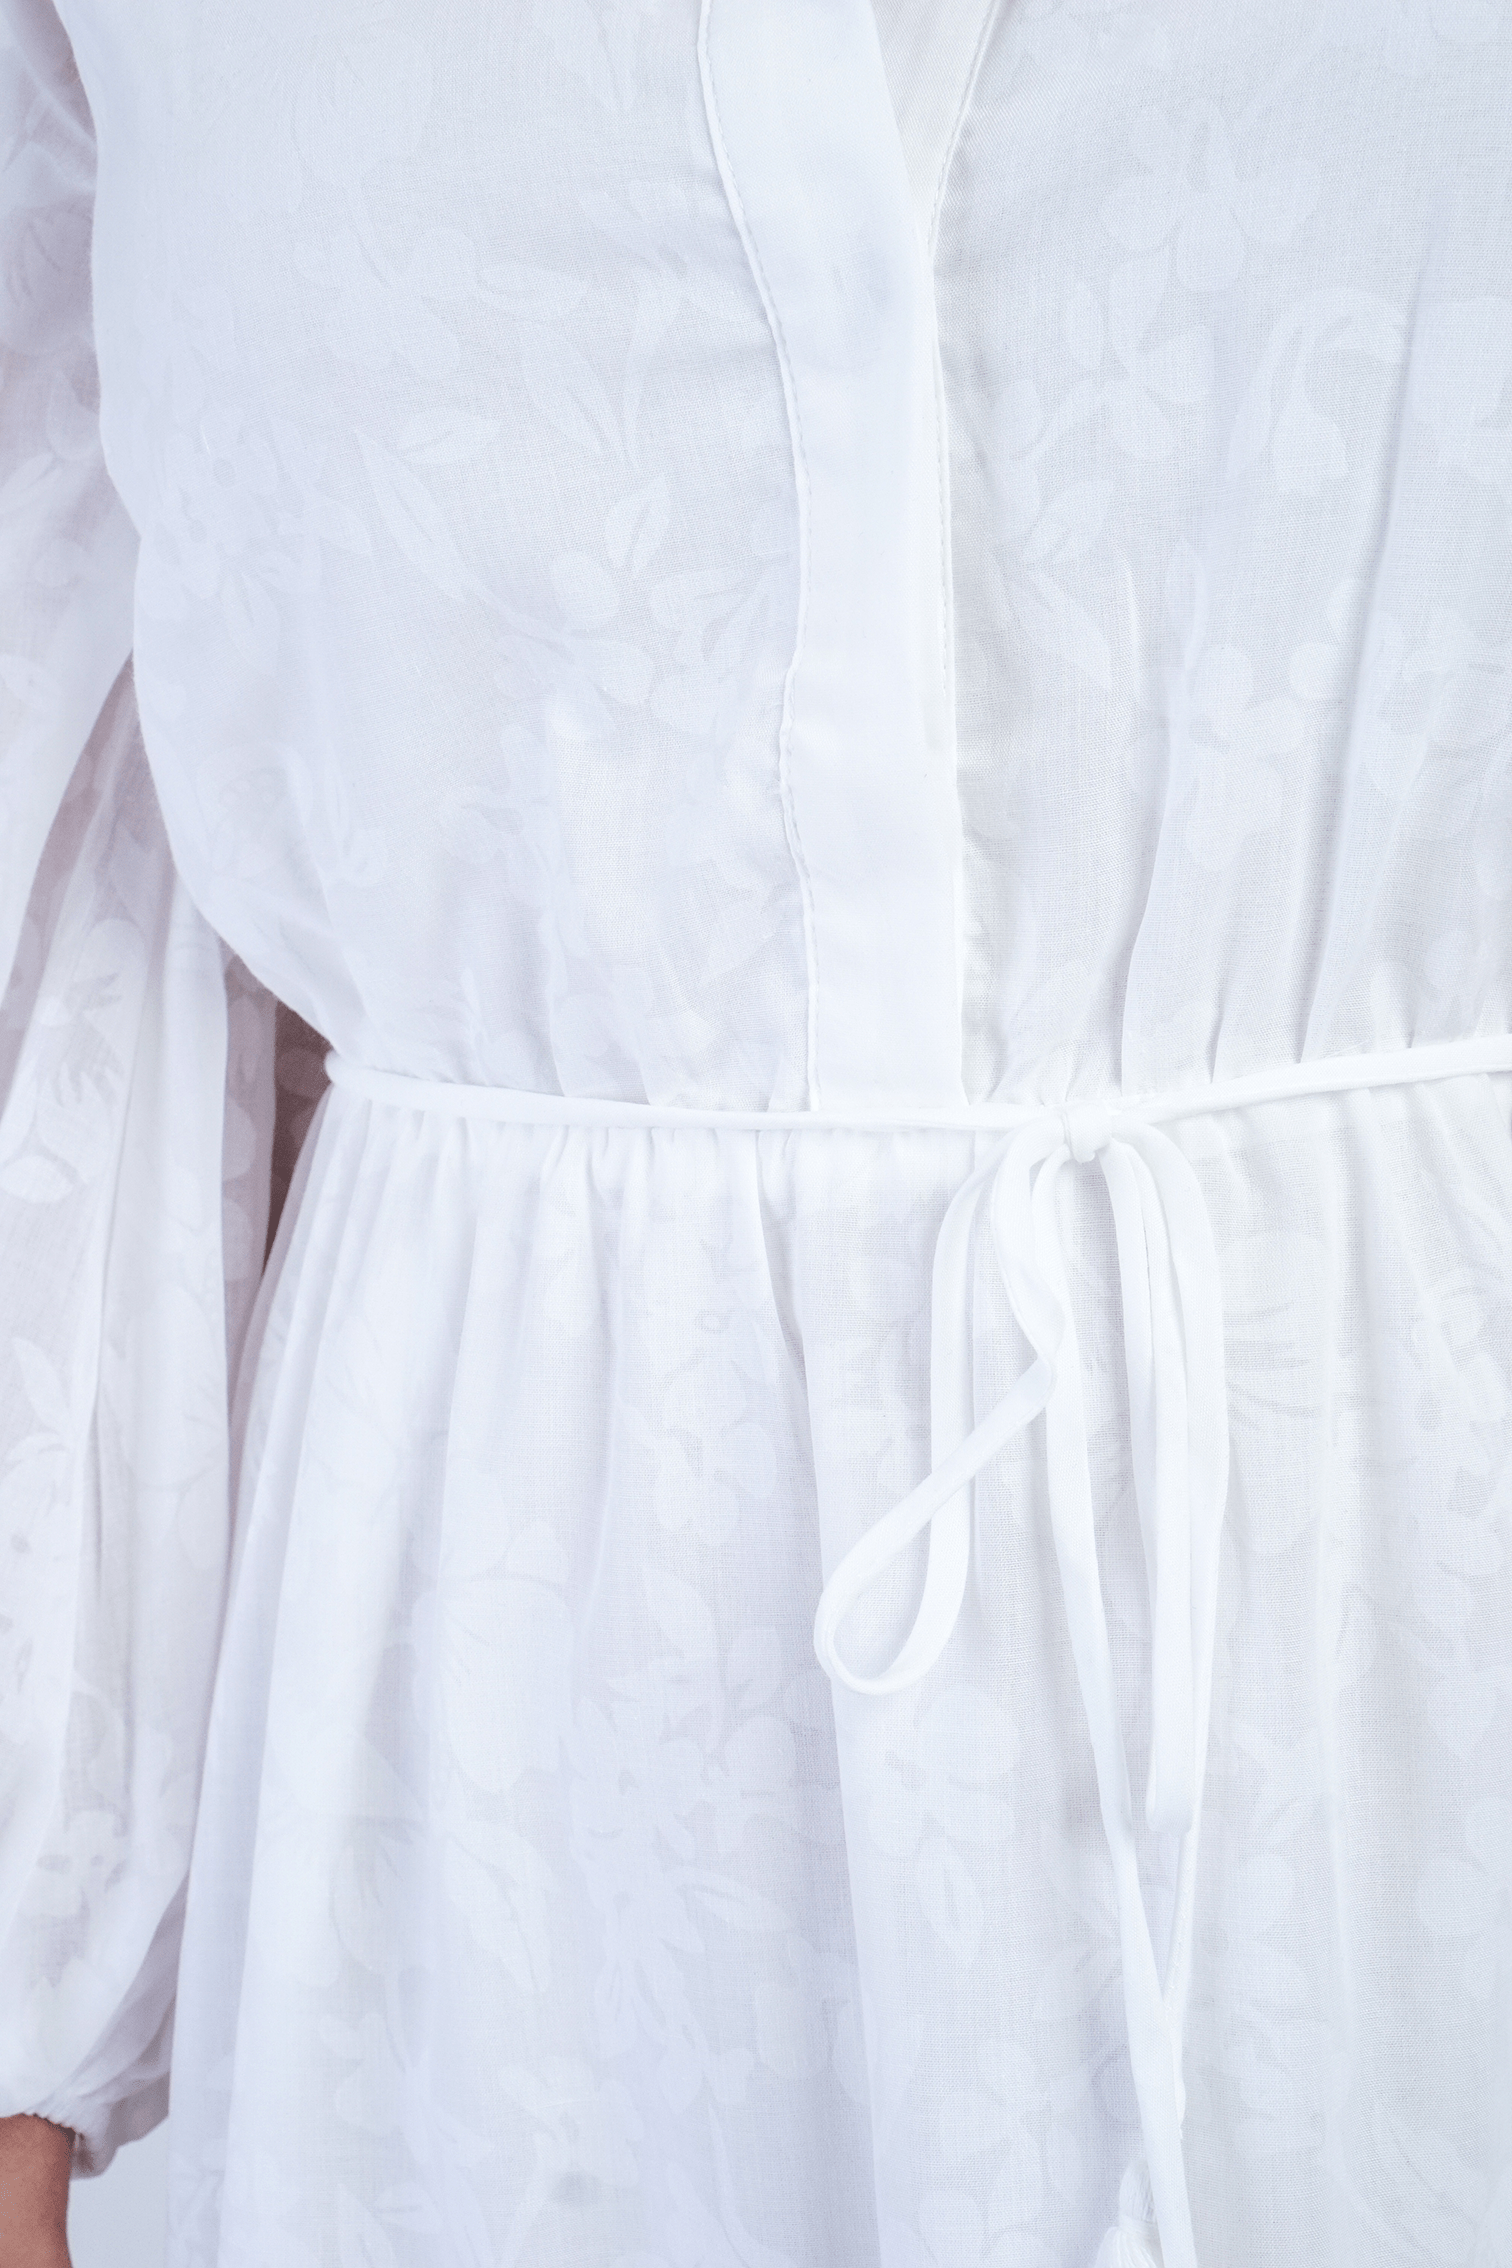 Chloe Dao Boutique DRESSES White Hidden Button Ballon Sleeve Long Dress